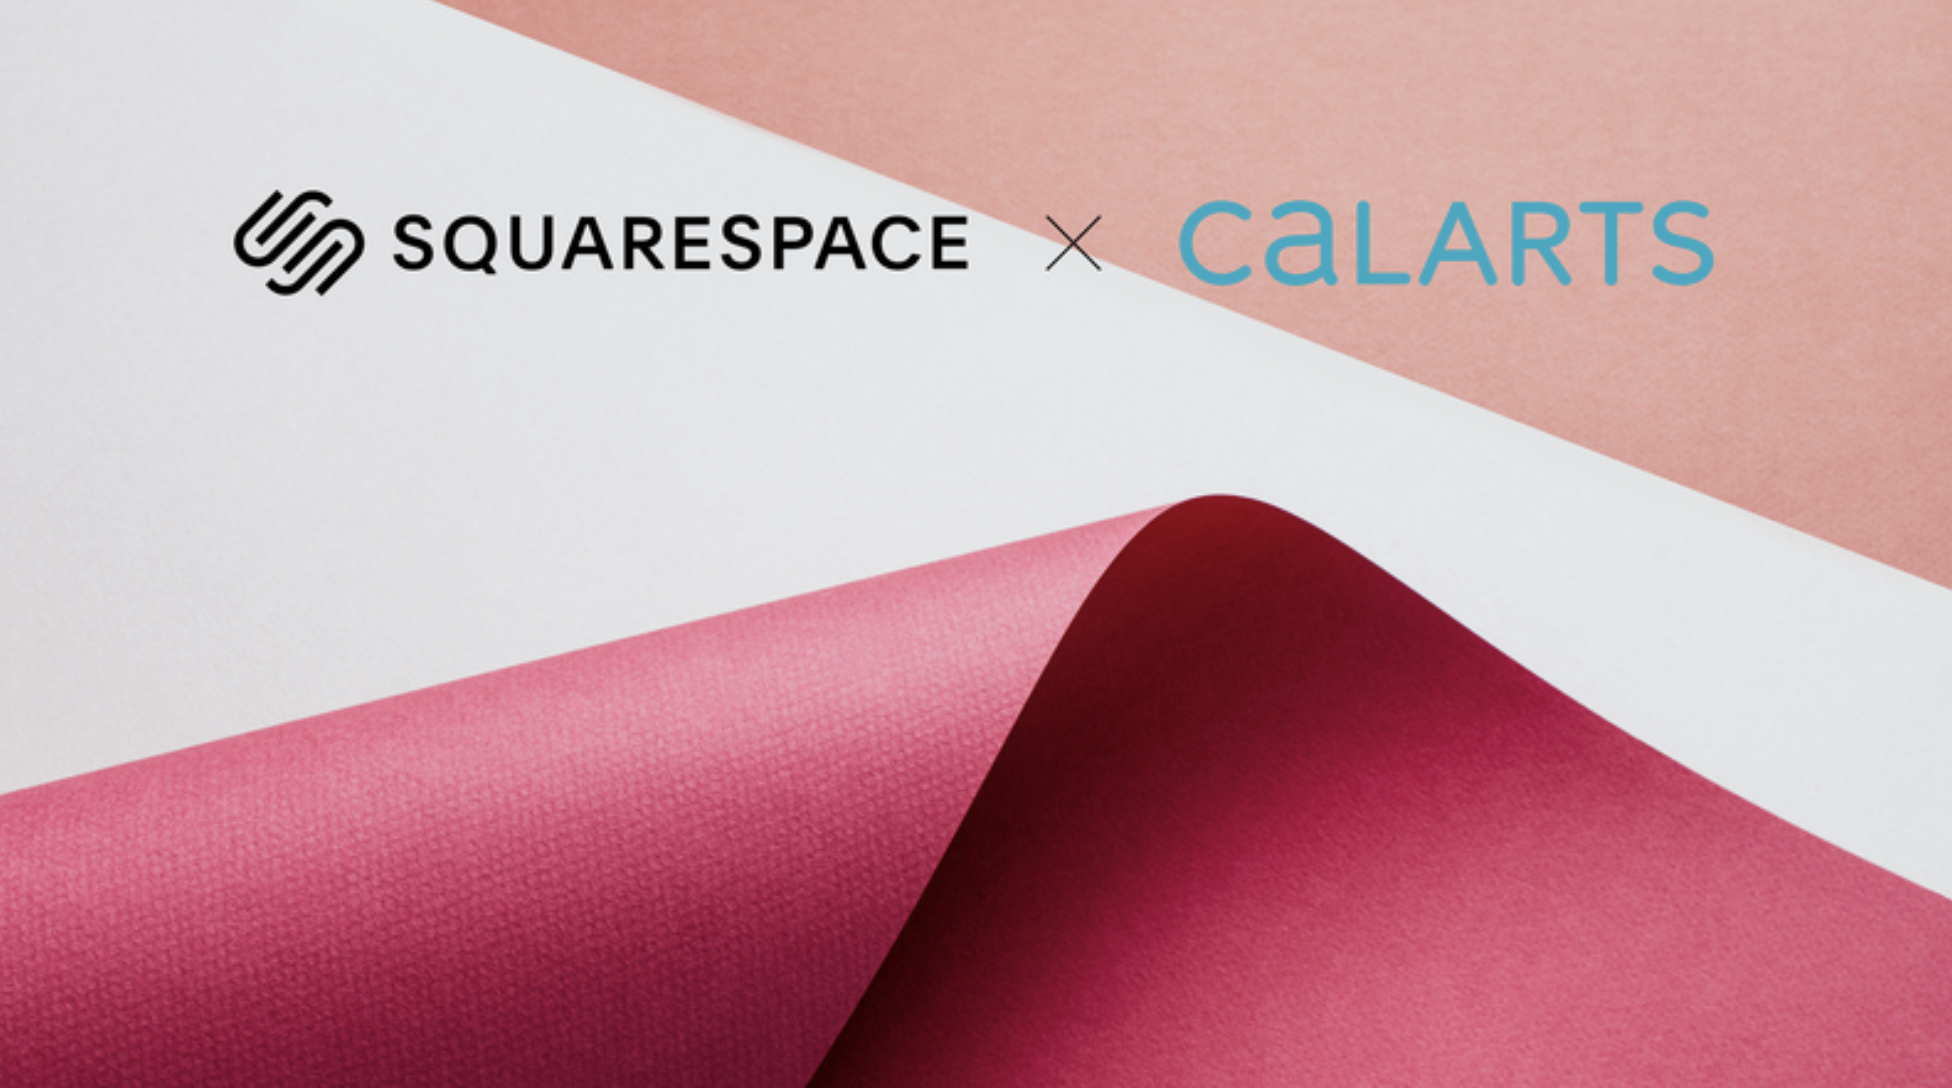 Squarespace logo and CalArts logo over construction paper